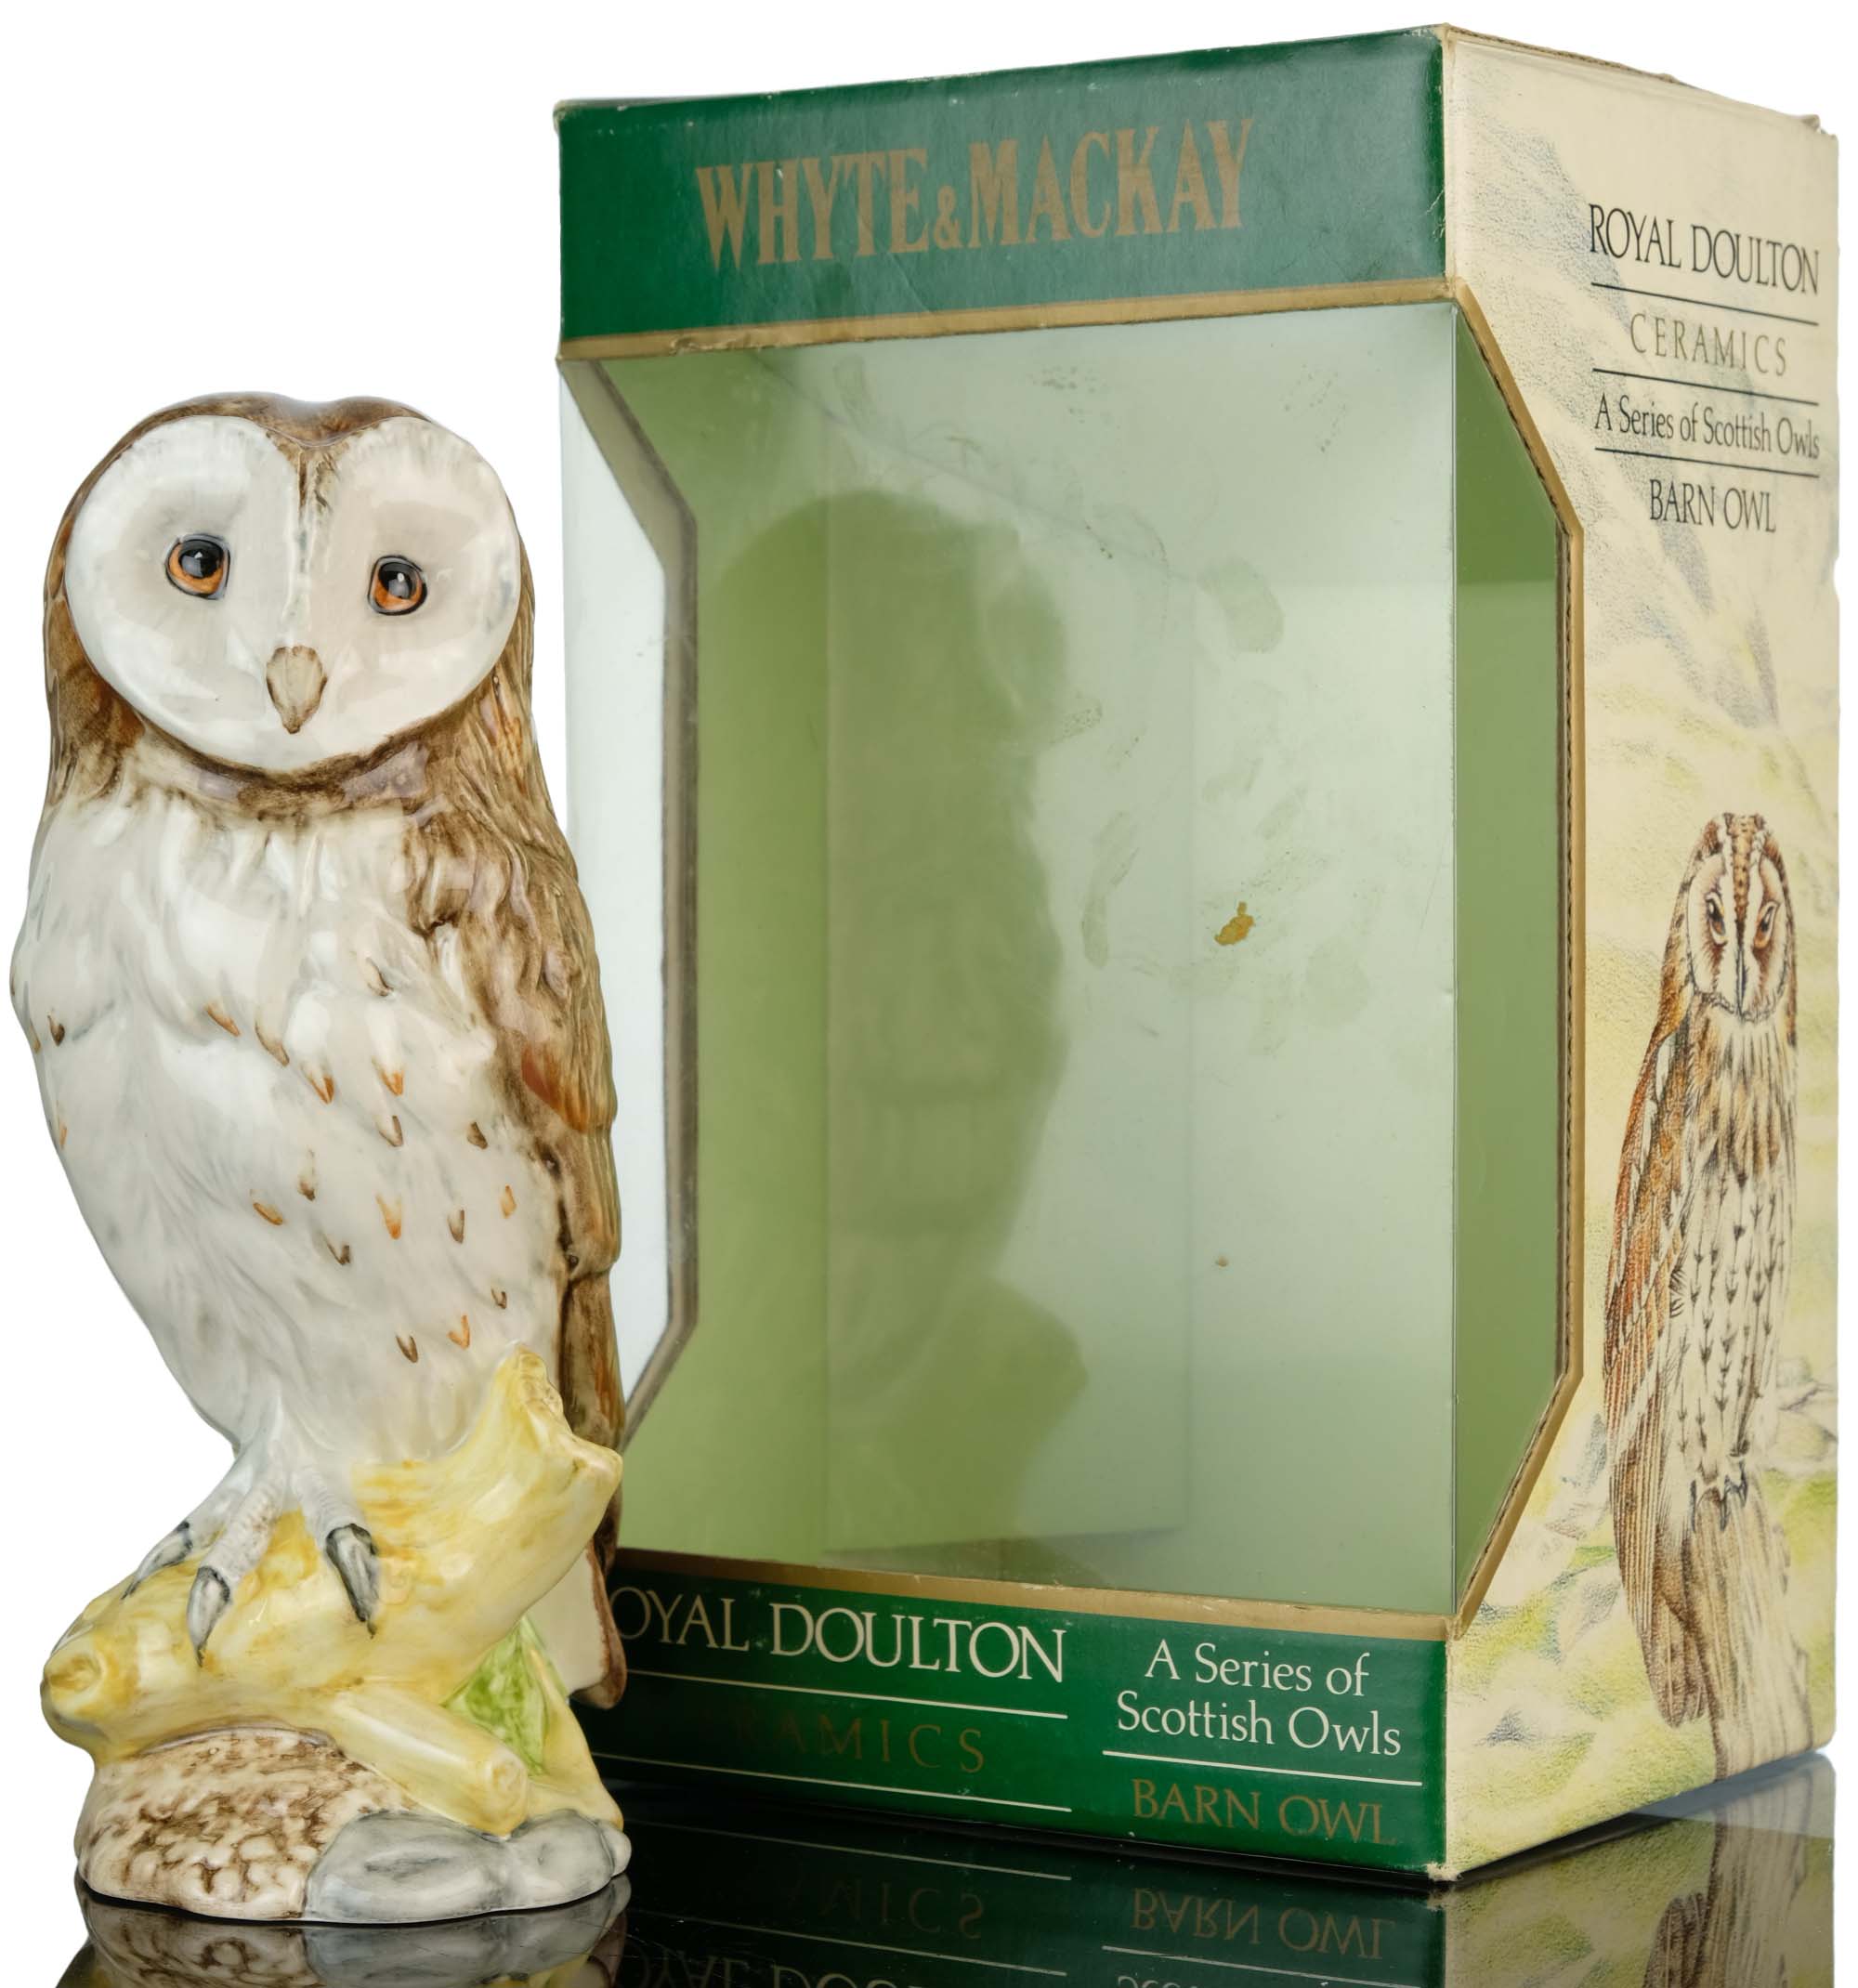 Whyte & Mackay Royal Doulton Ceramic Barn Owl